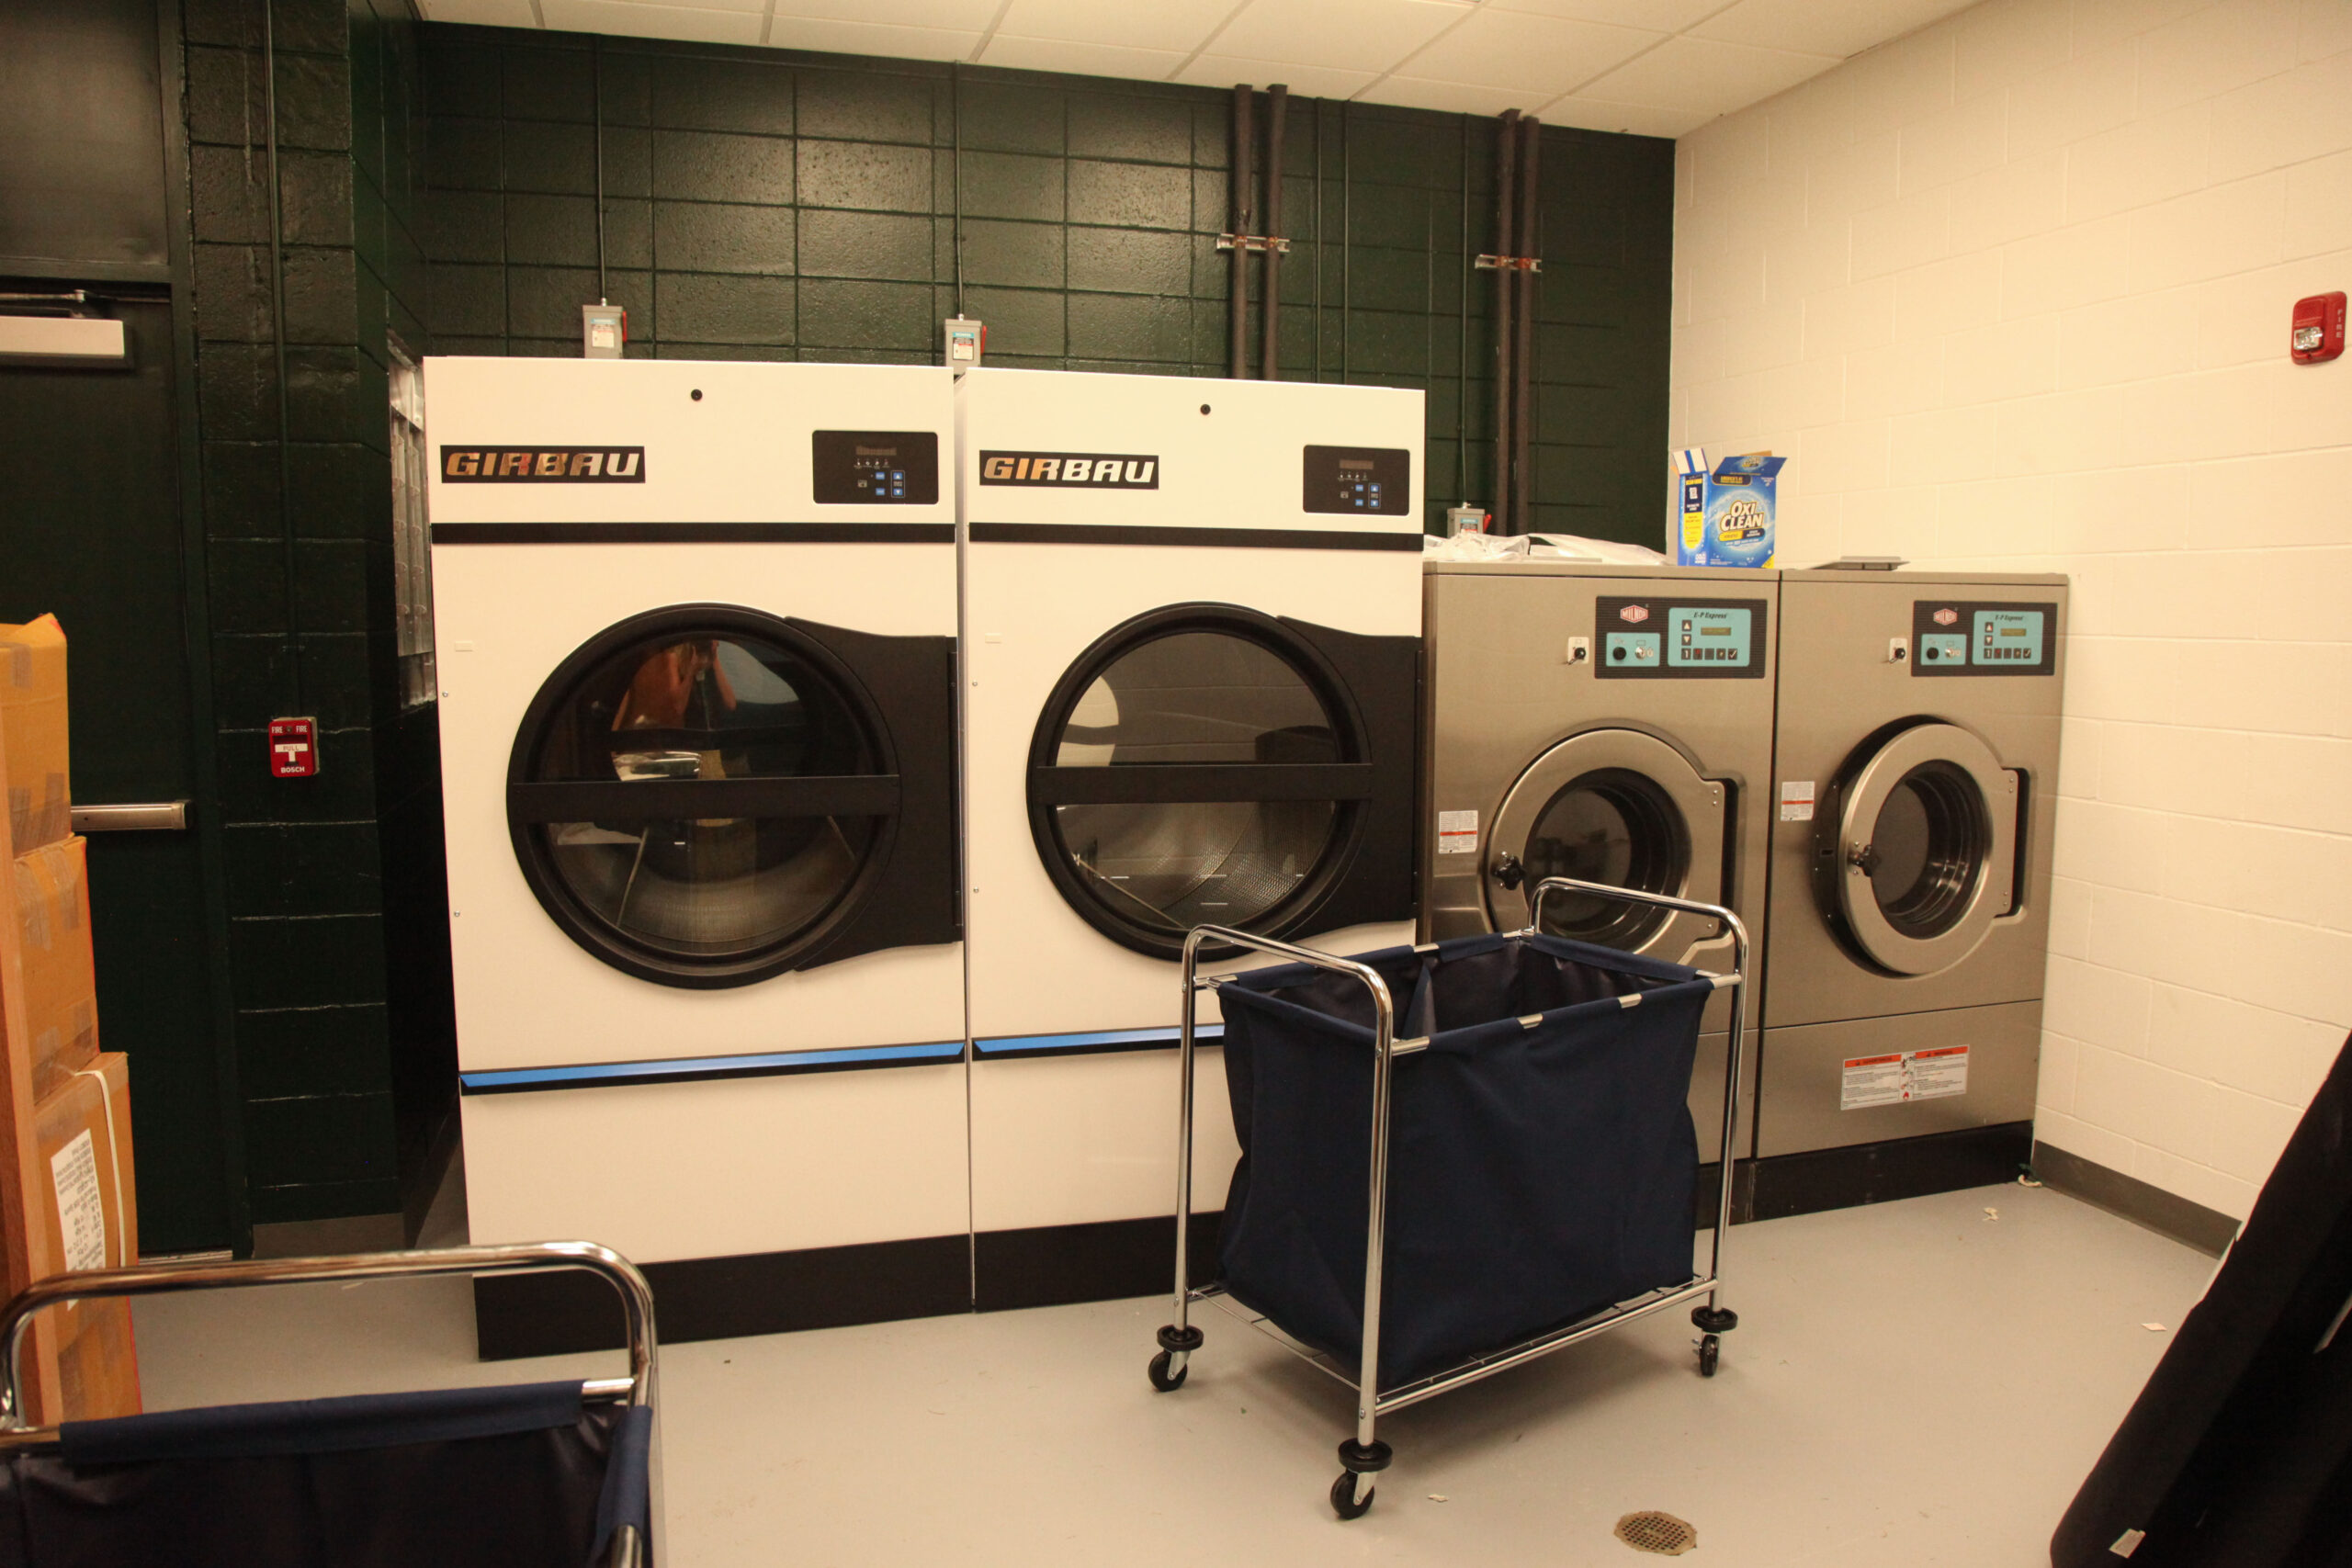 TU equipment room and laundry